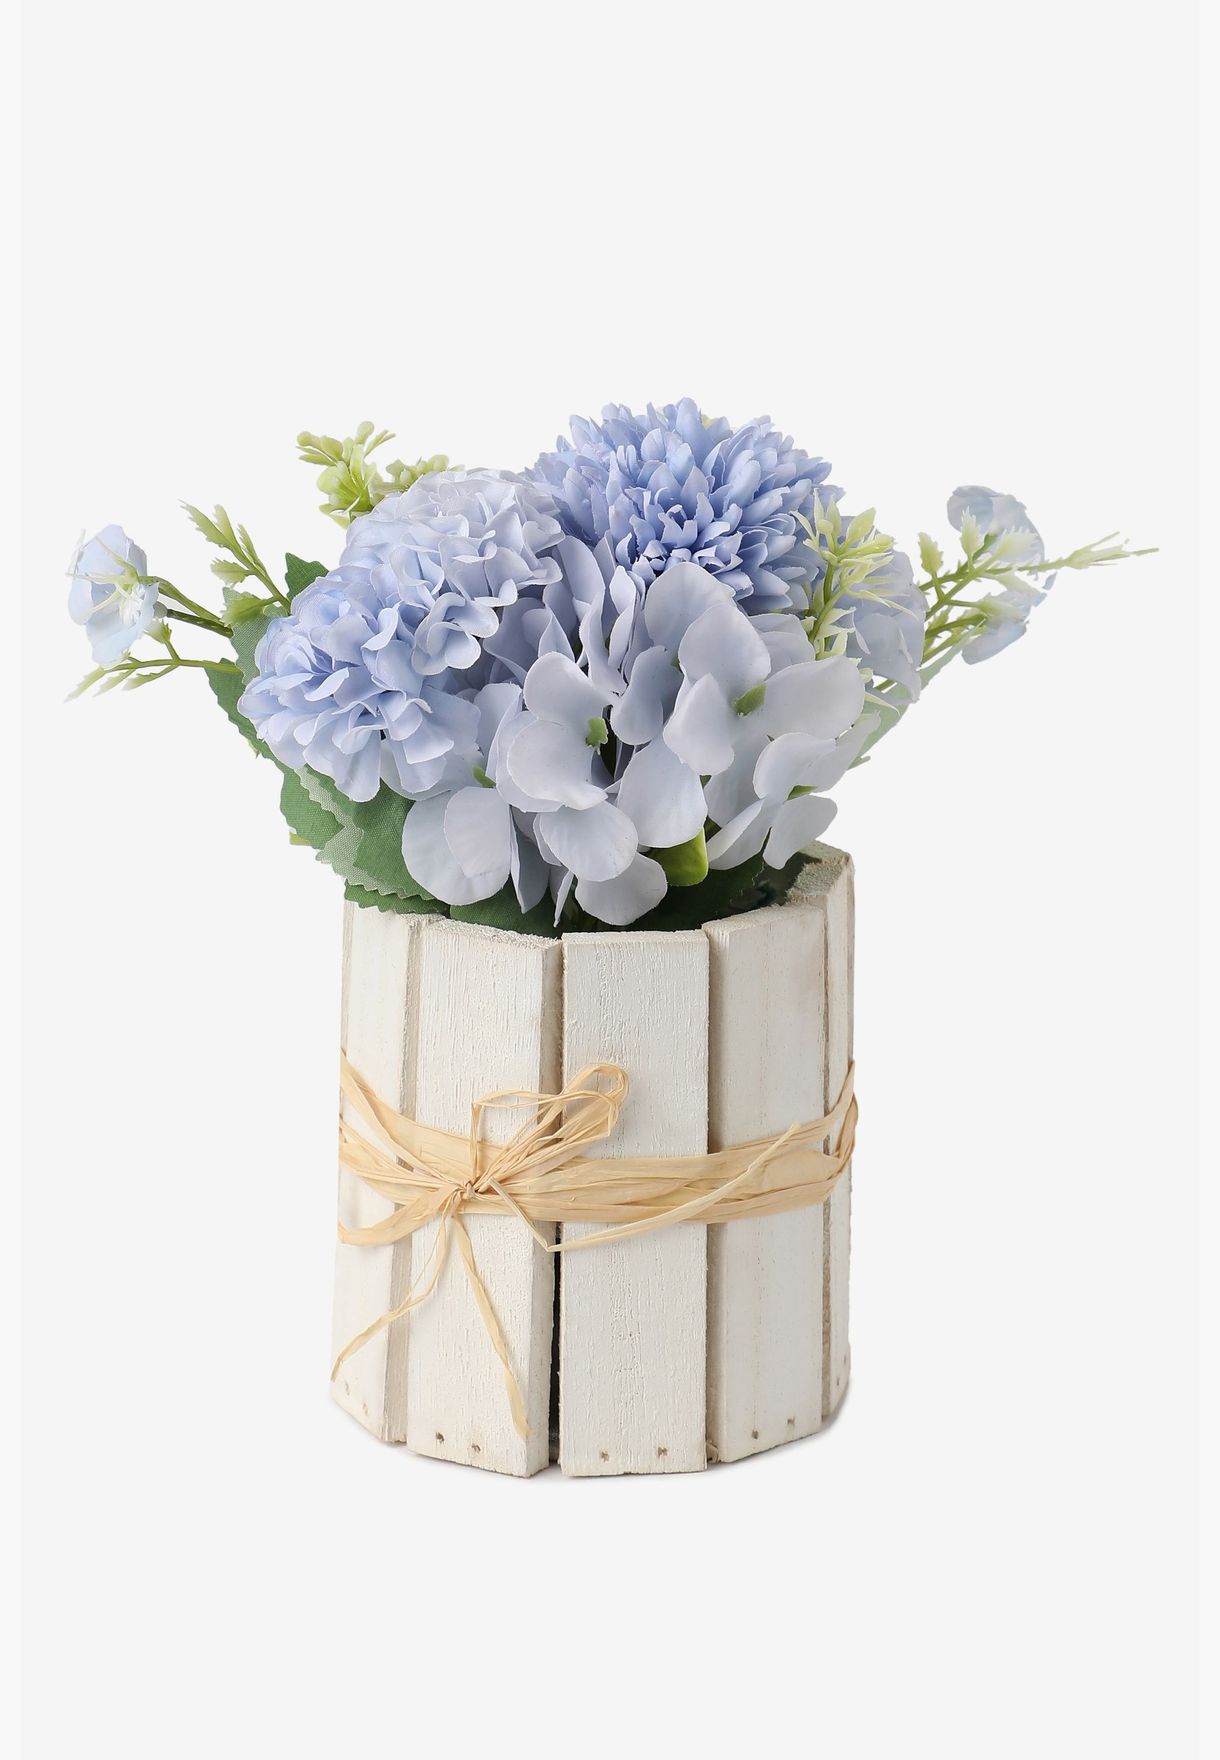 Artificial Flower Bouquet In Wooden Crate Pot For Home Decor Indoor & Outdoor 